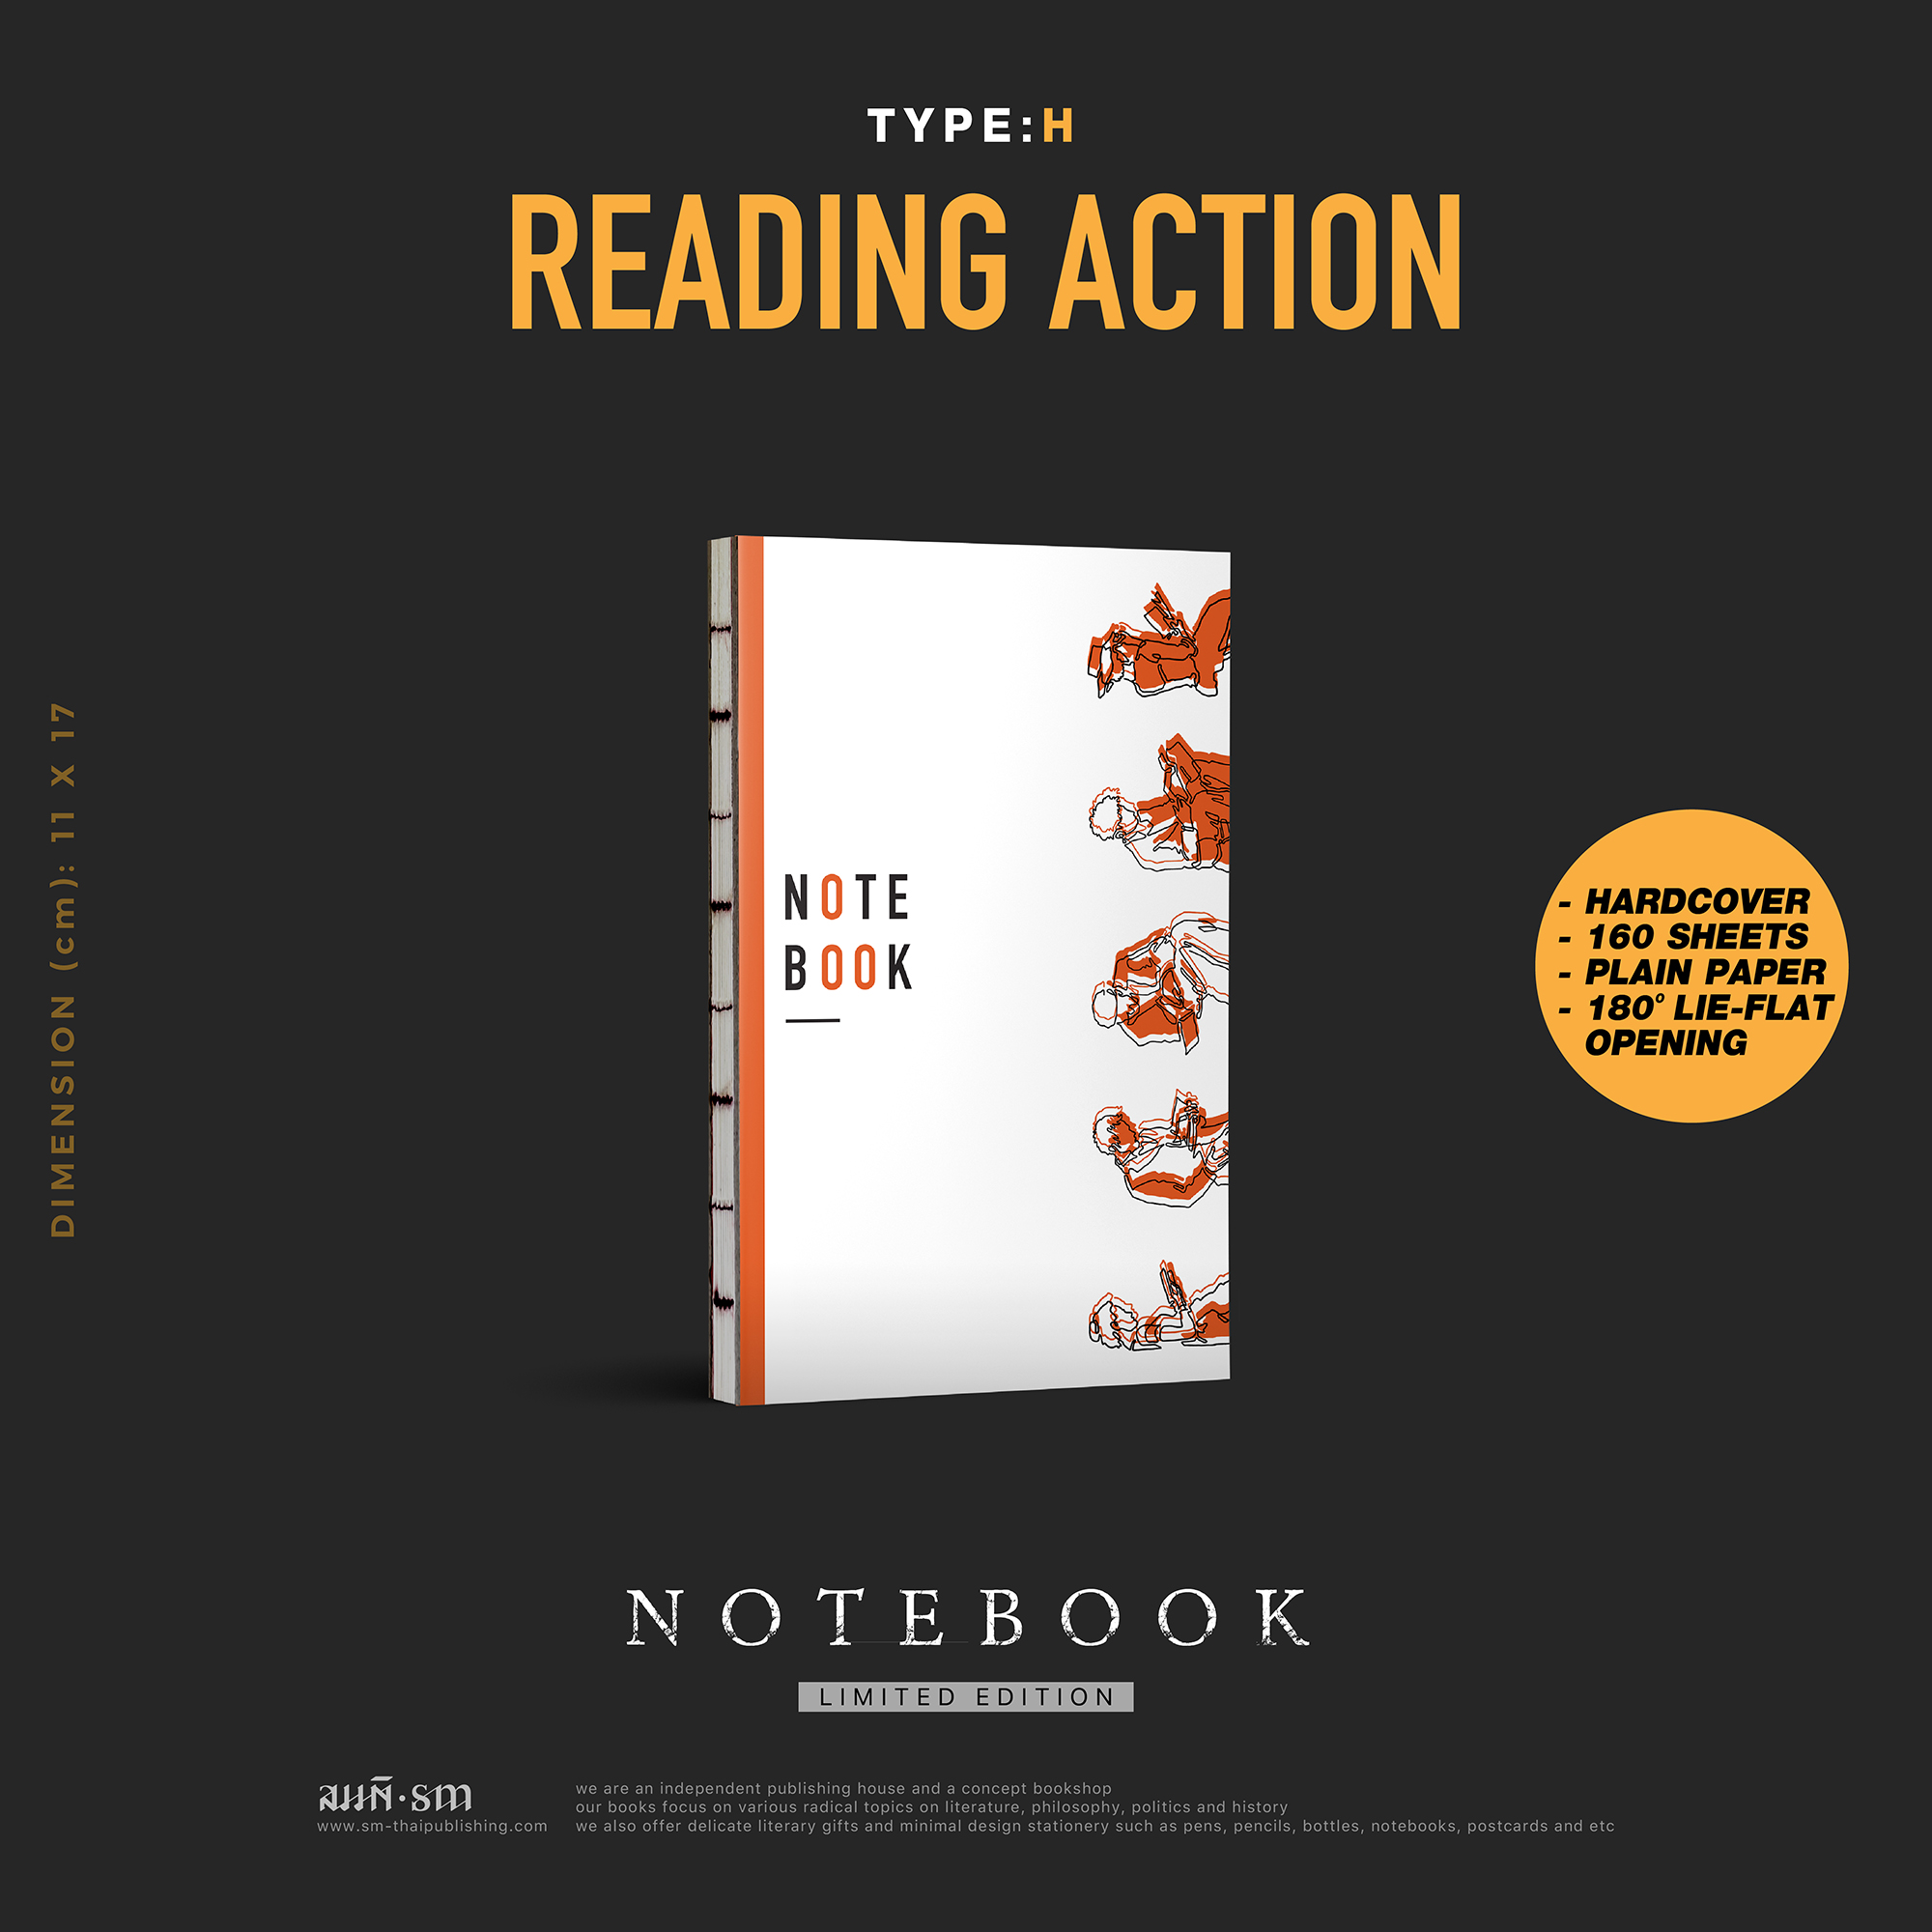 Notebook Reading Action H | สมุดโน้ตรูปวาดการอ่าน